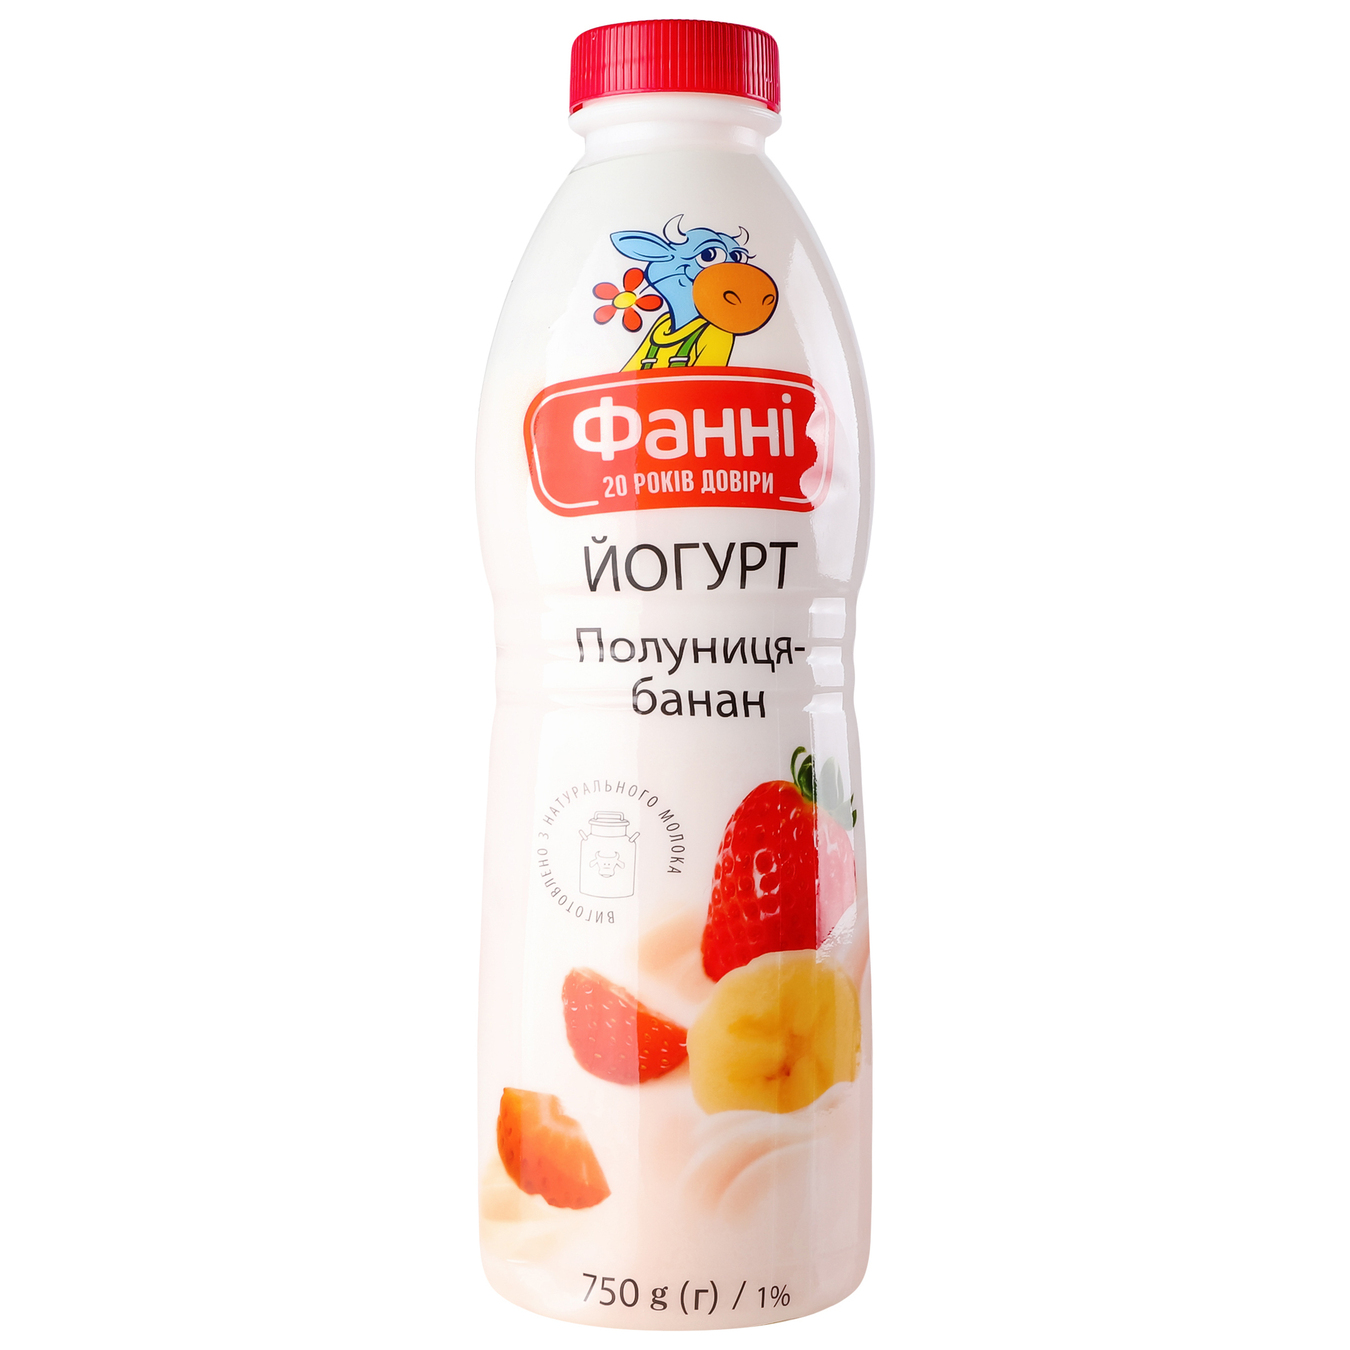 Fanny yogurt with strawberry-banana filling drinking bottle 1% 750g